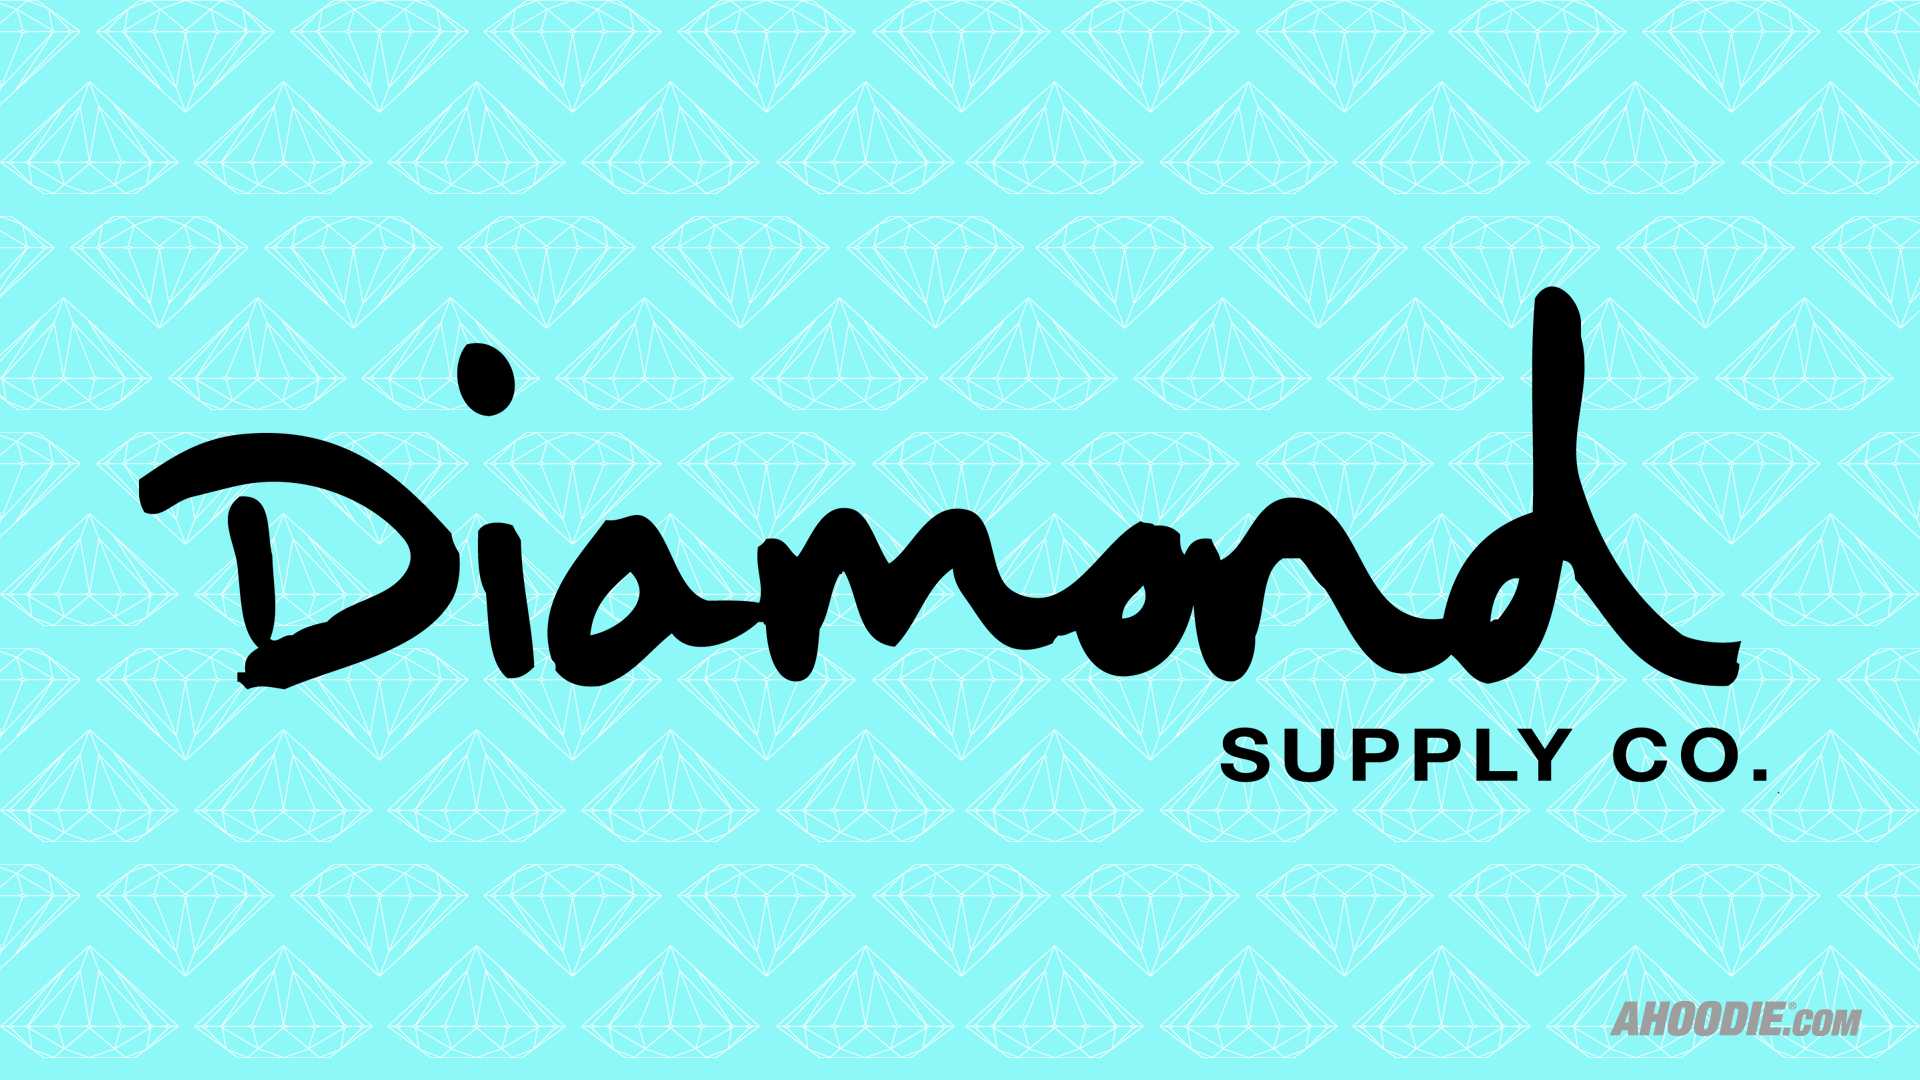 Diamond supply co wallpaper Gallery